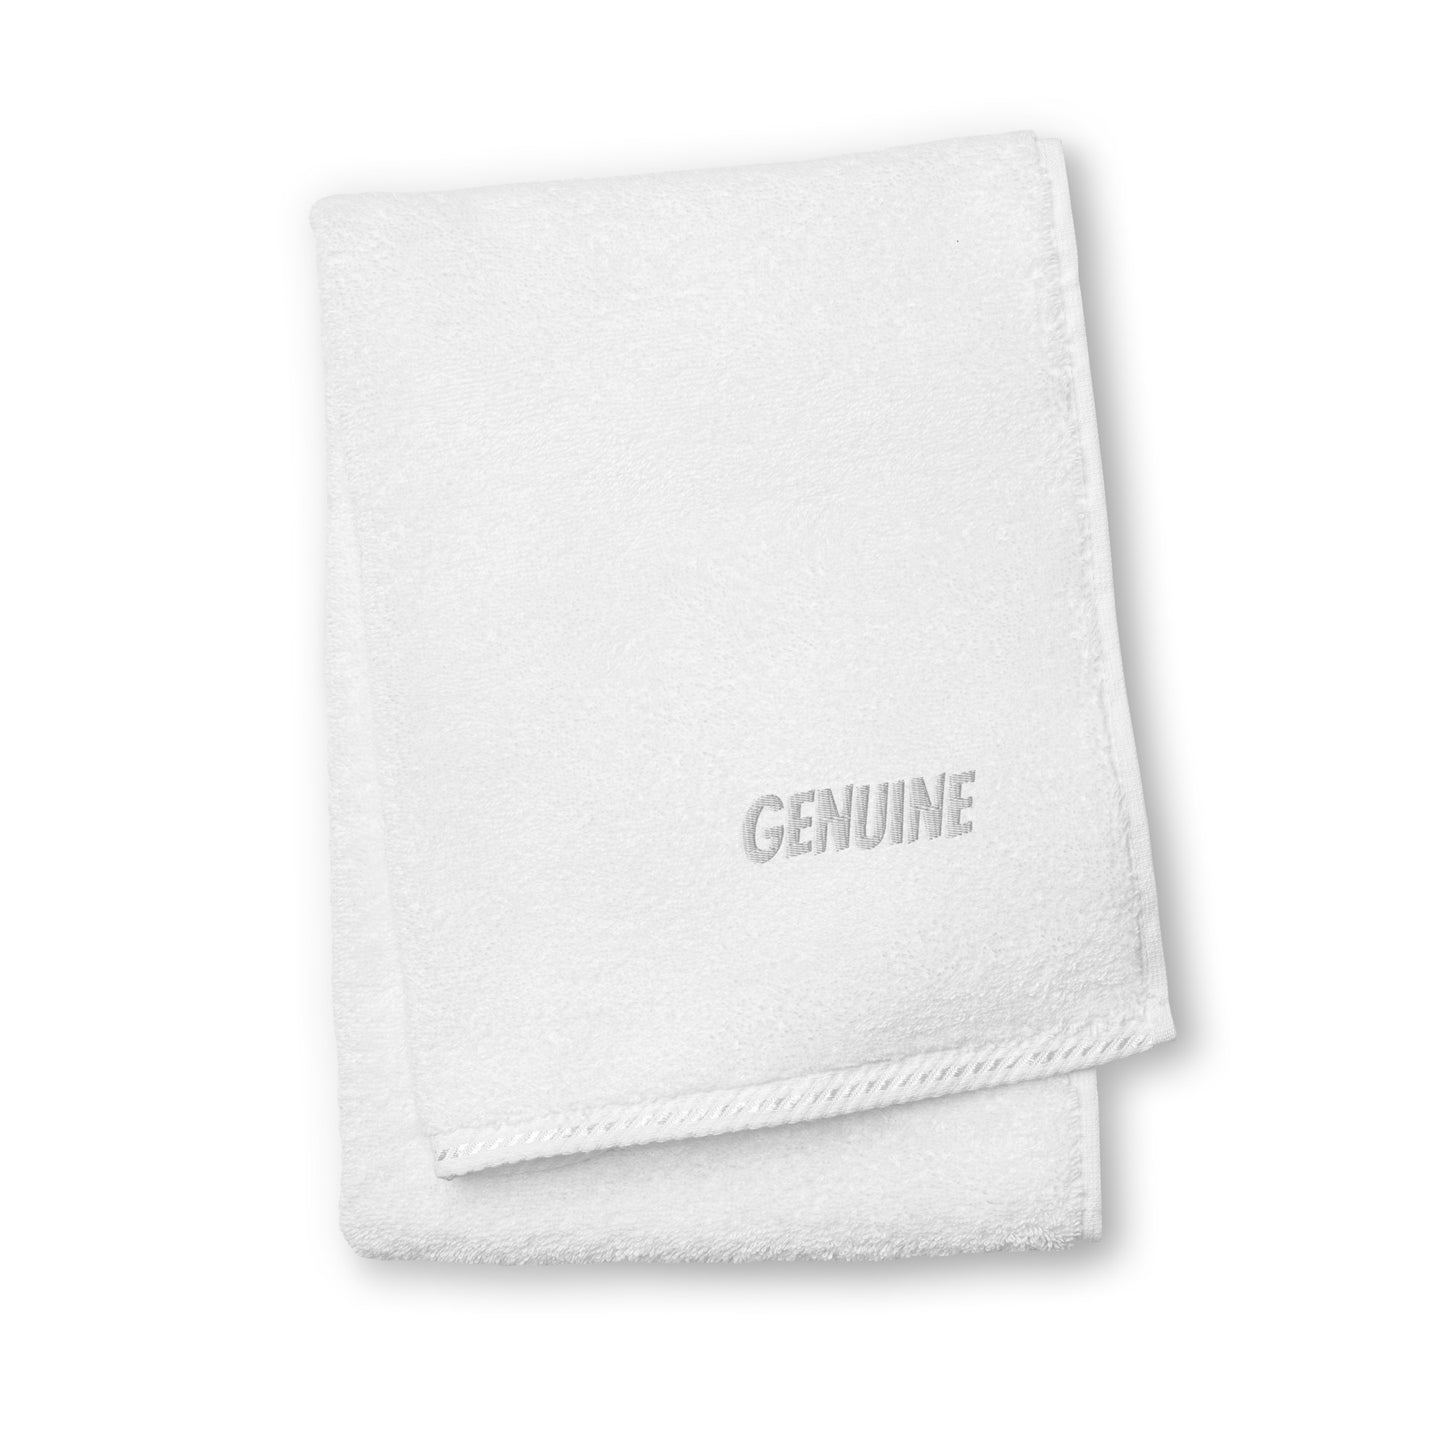 Genuine Design Plush Turkish Towels